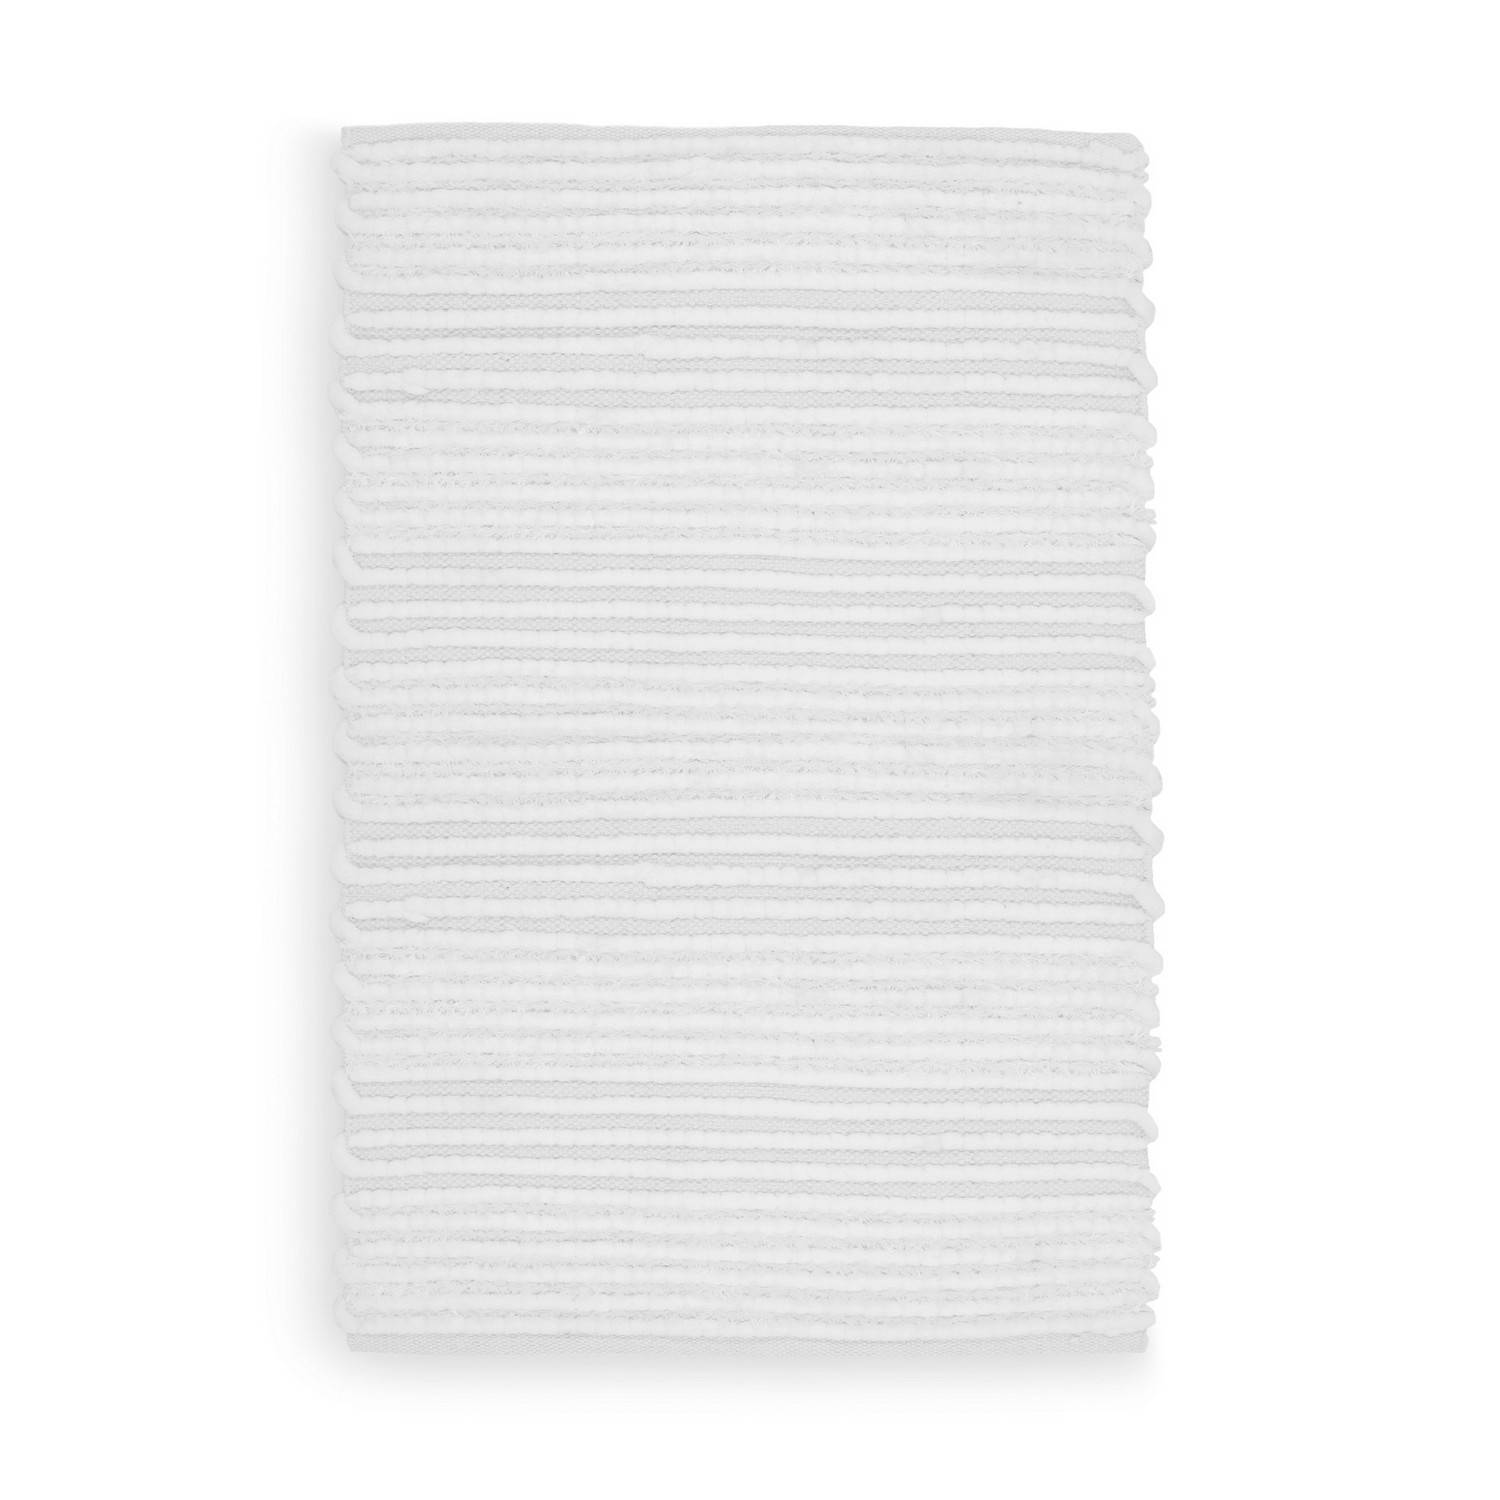 Heckett Lane Badmat Solange 60x100cm white